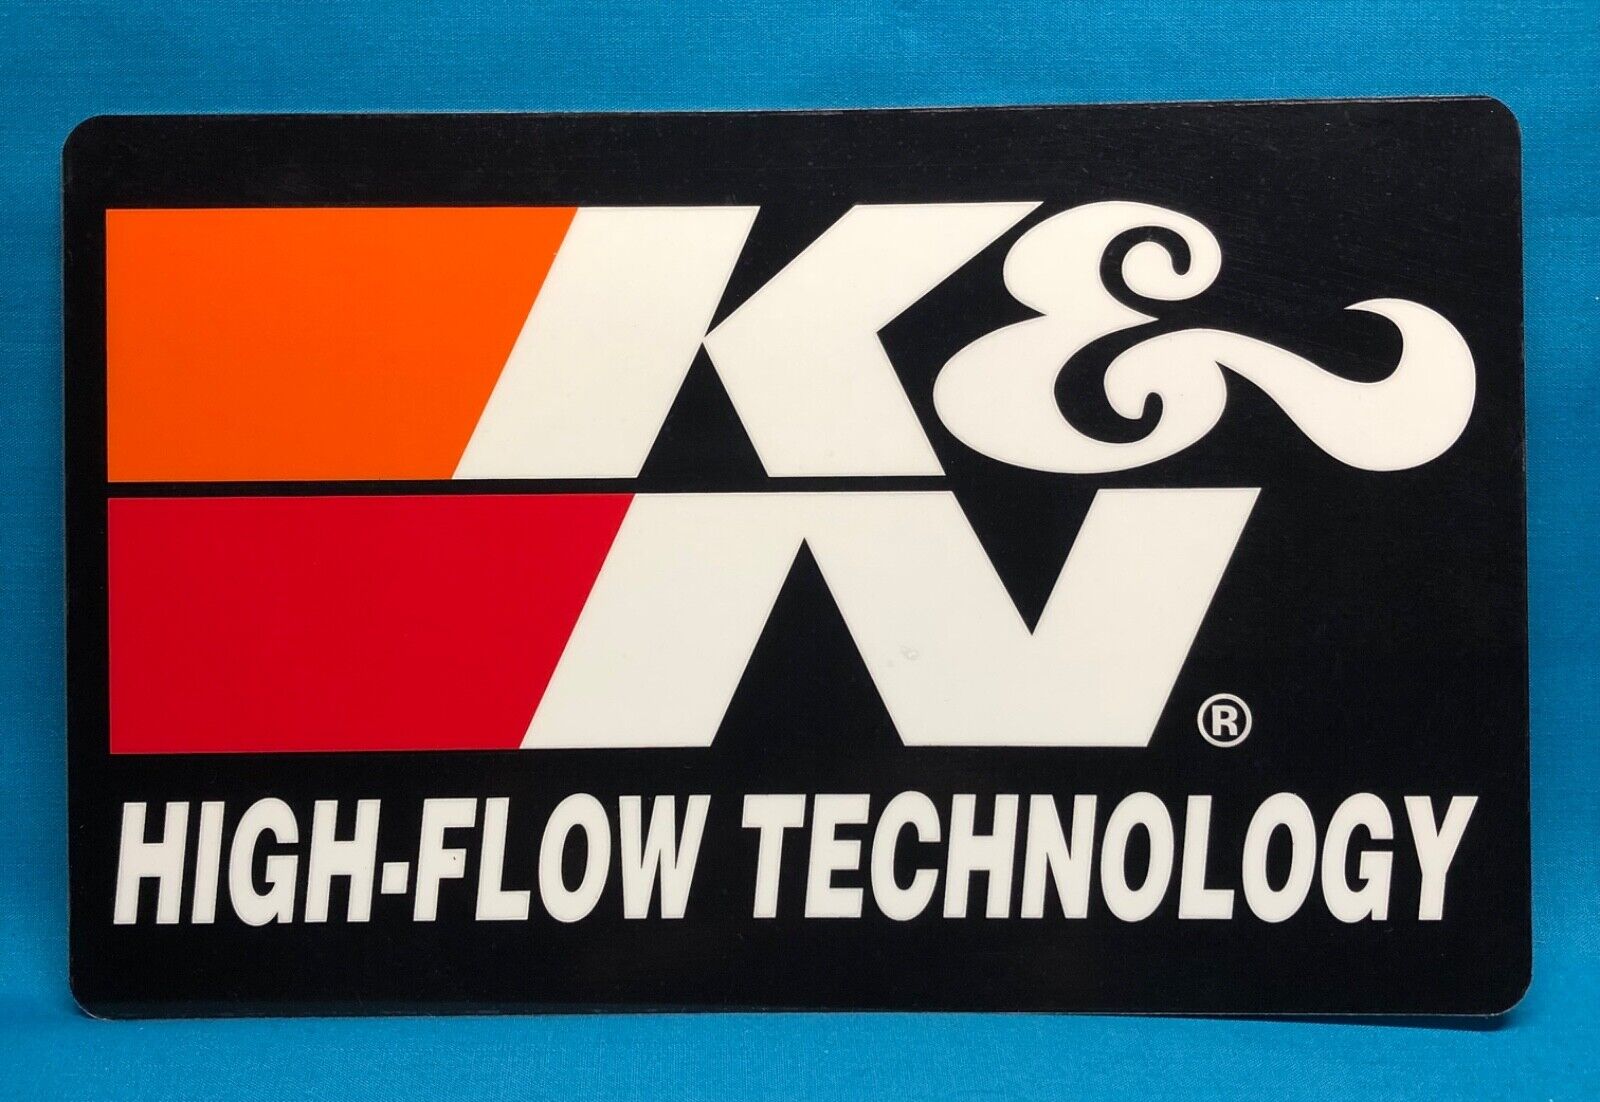 K & N  High-Flow Technology  5”x8”  Metal Sign  w/adhesive backing